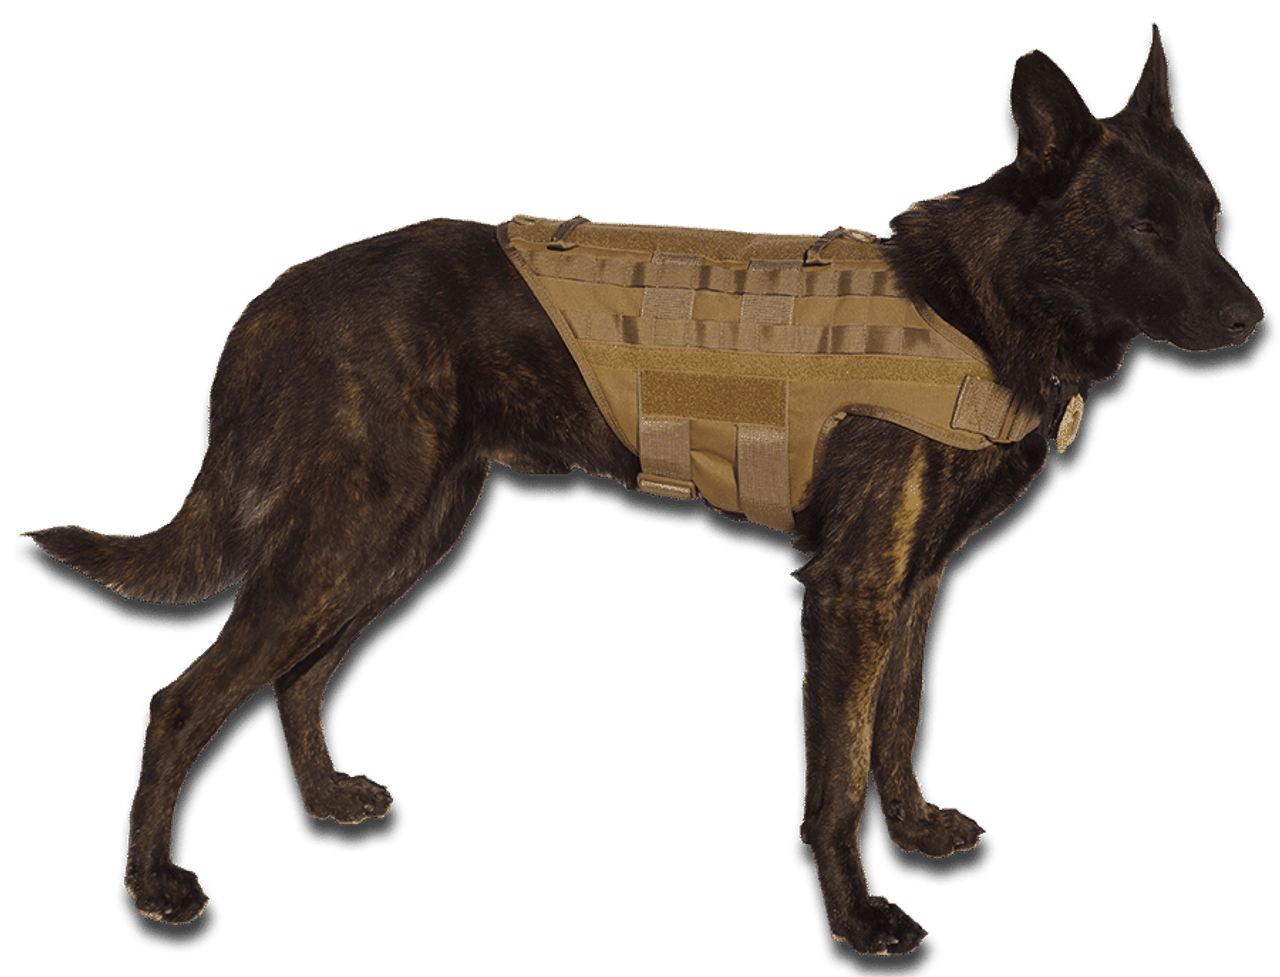 CaliberDog Ballistic Level III-A Kevlar Working Dog Vest - Active Dogs